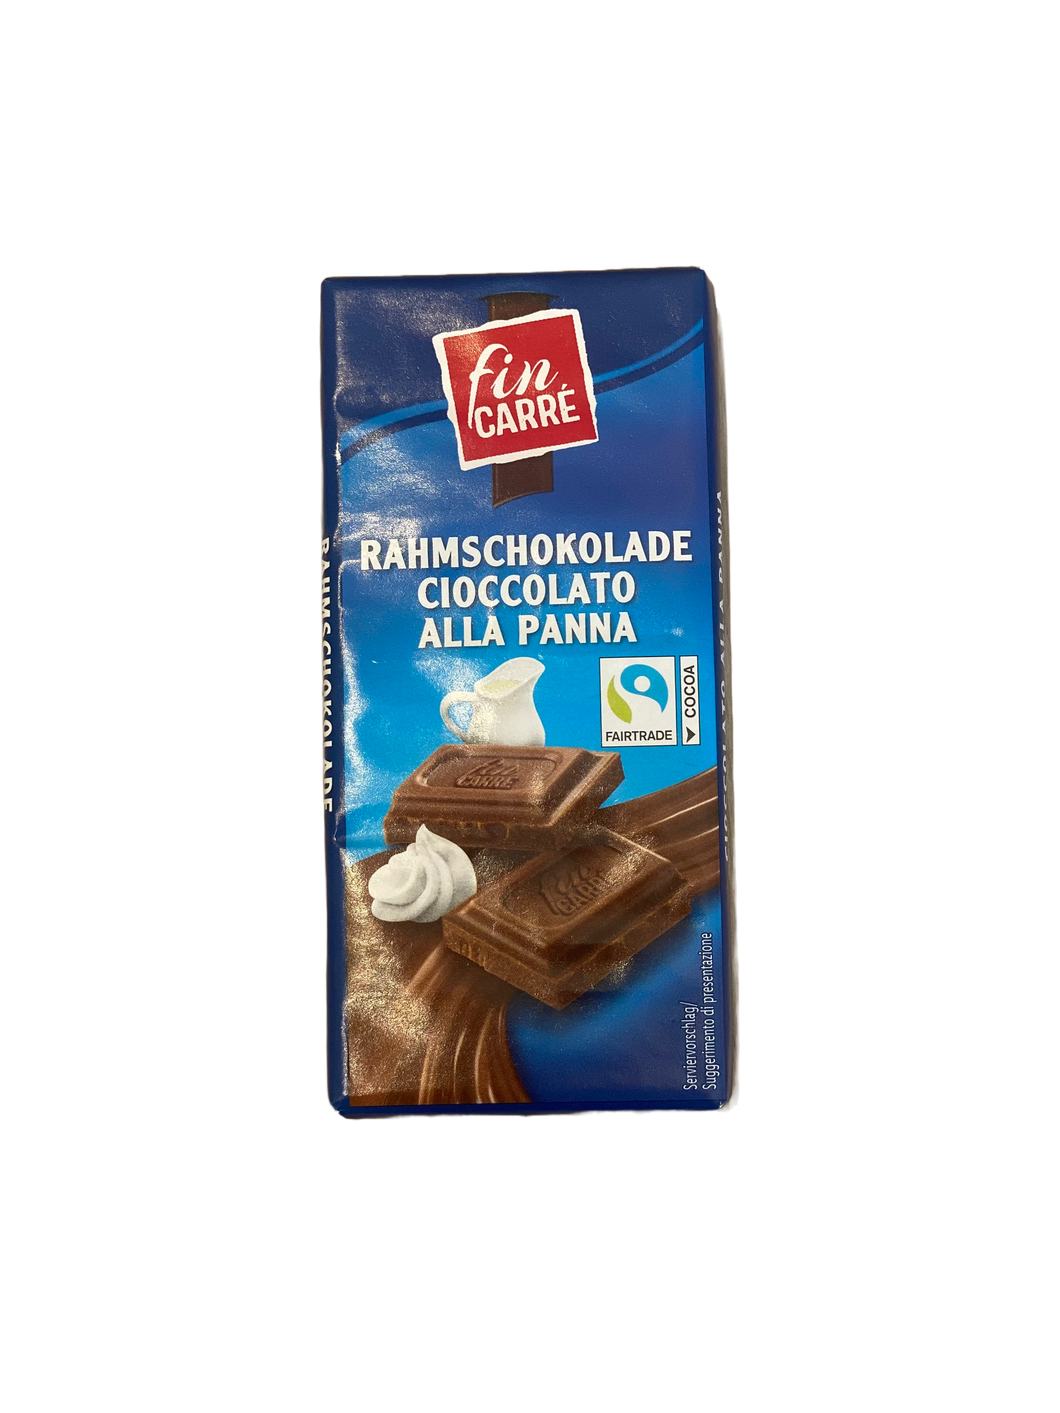 Alla Panna Chocolate 40g- Fin Carre